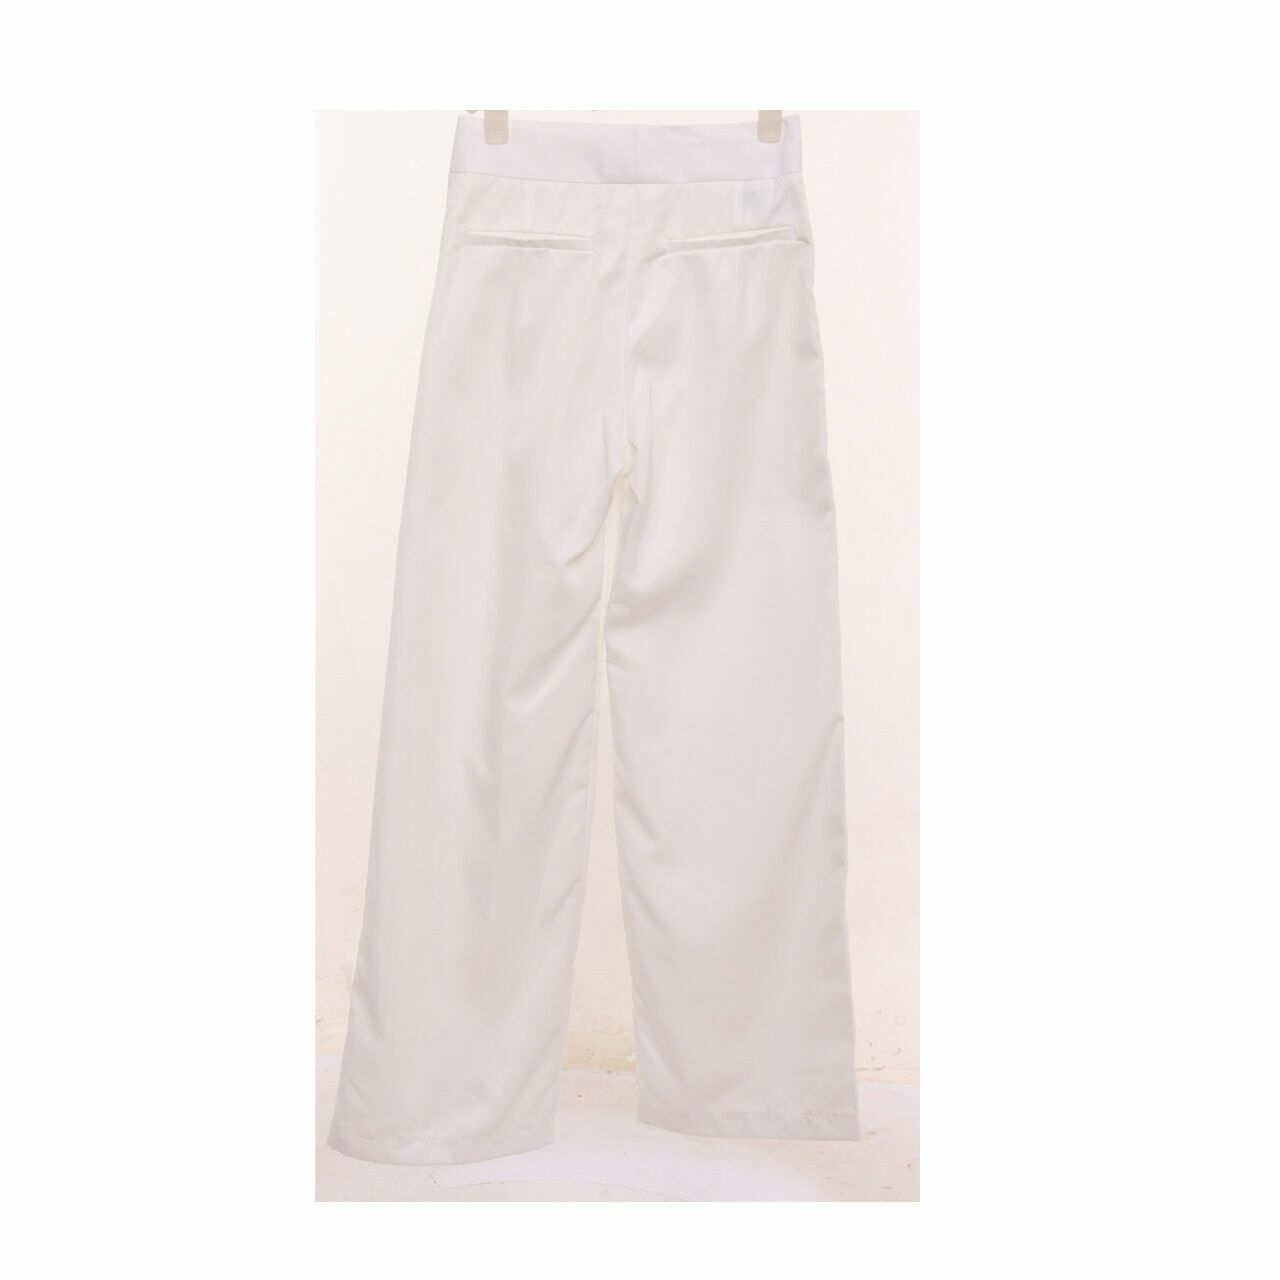 Marlan White Long pants